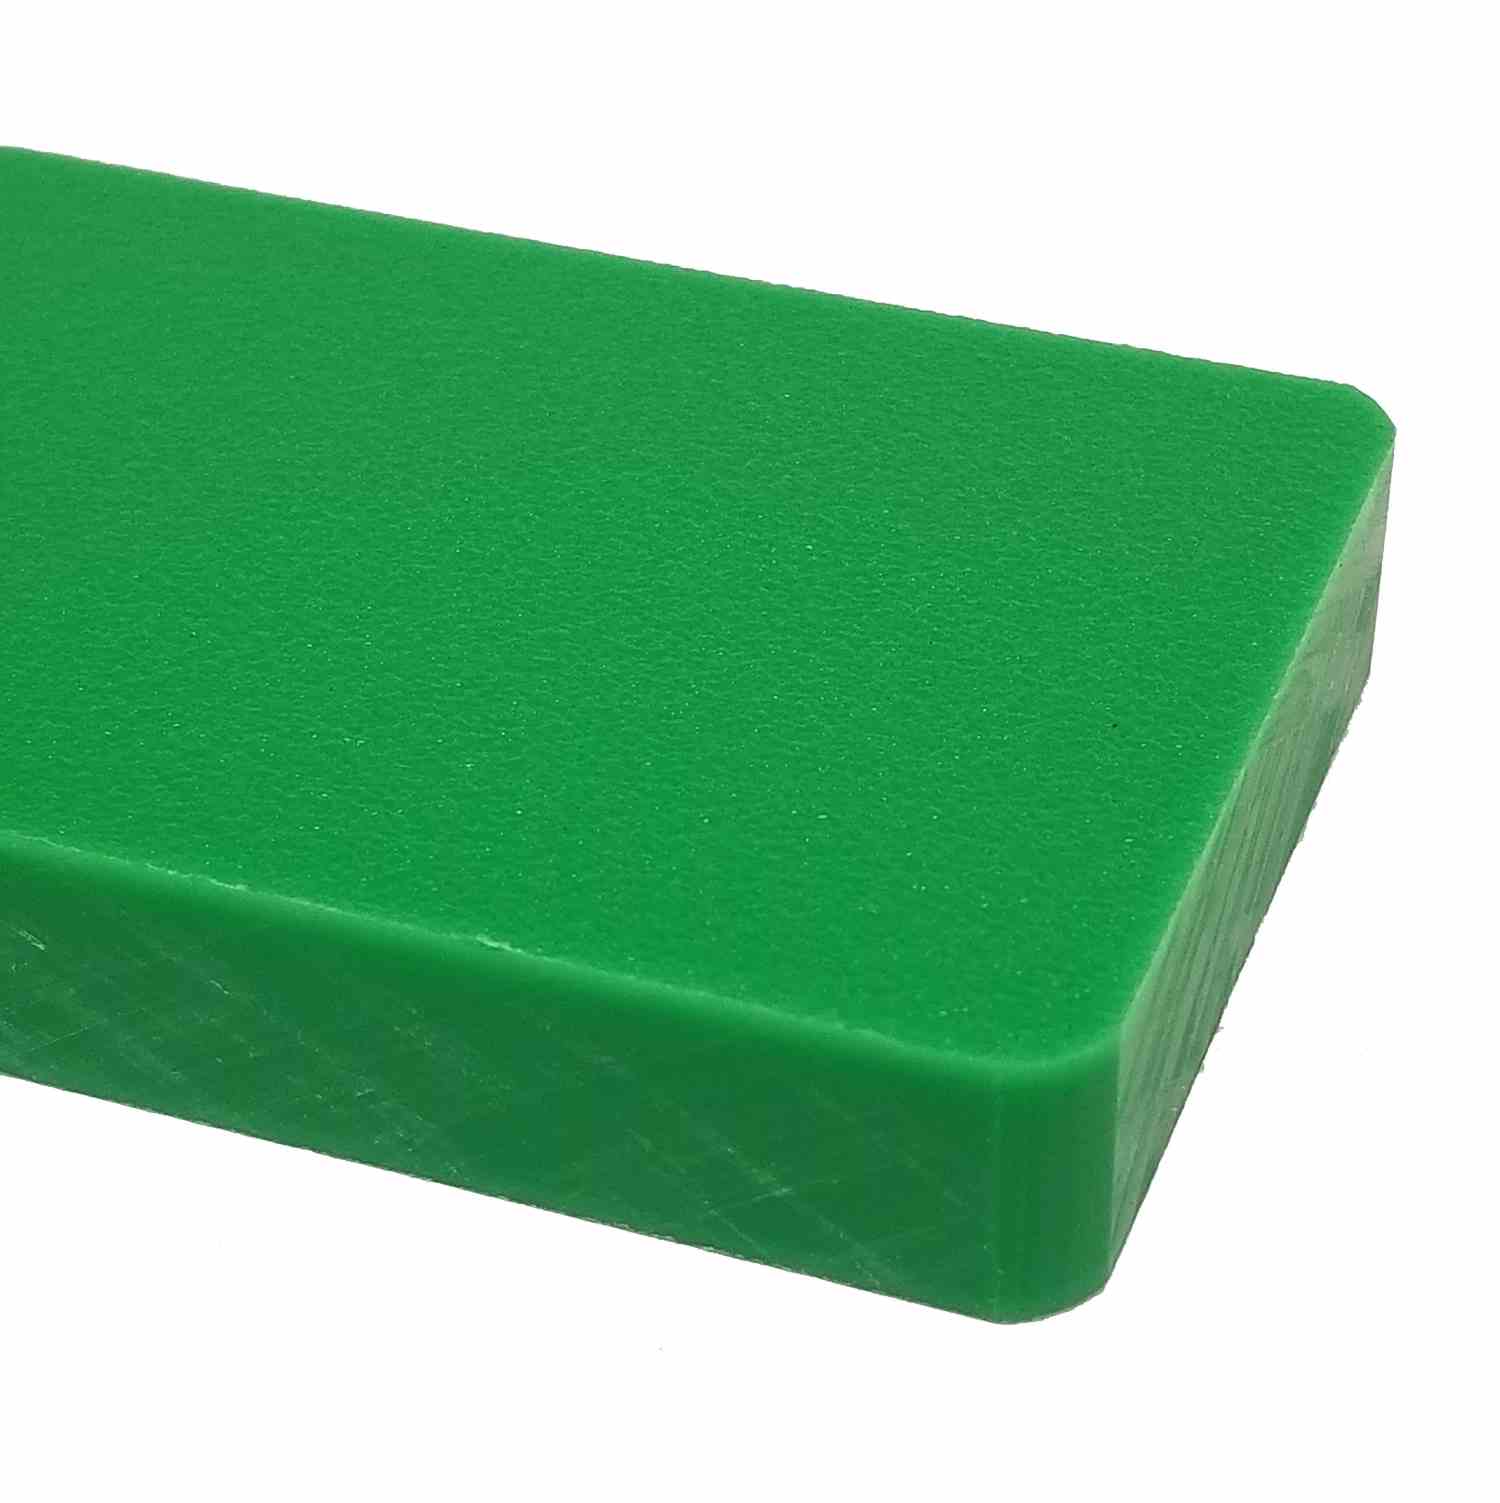 HDPE Colored Cutting Board | Green